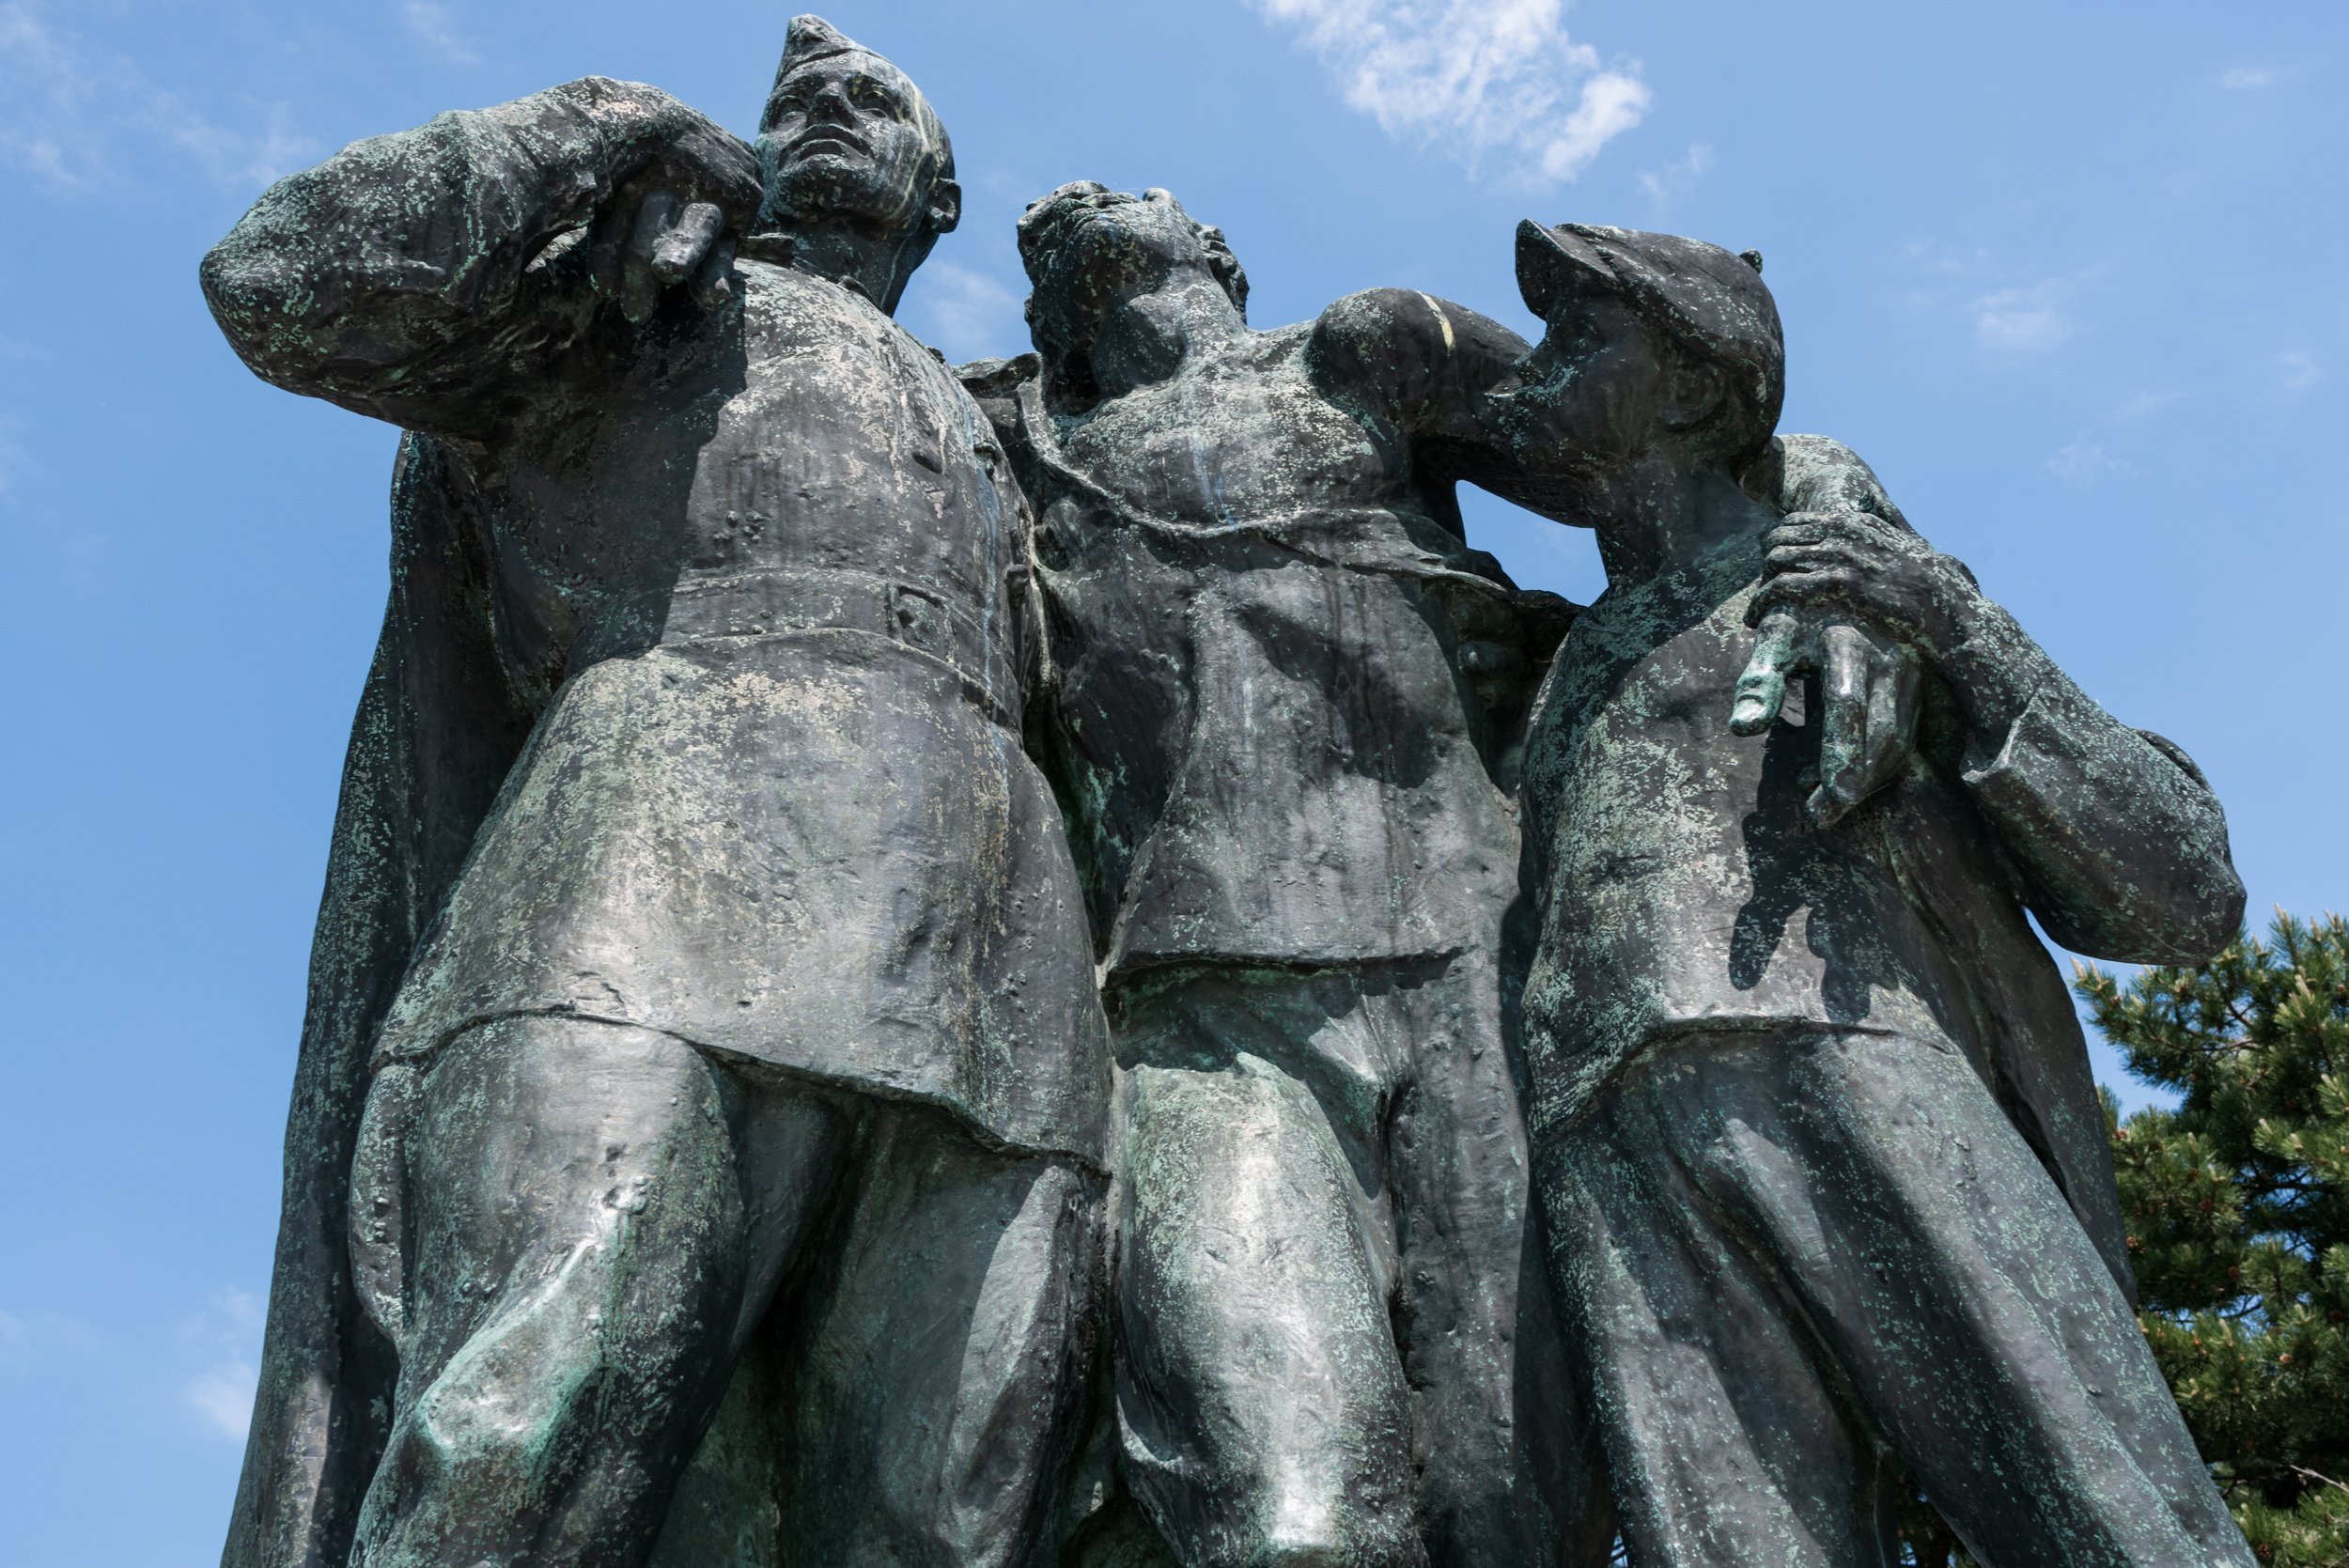 Three men statue at Slavin Memorial